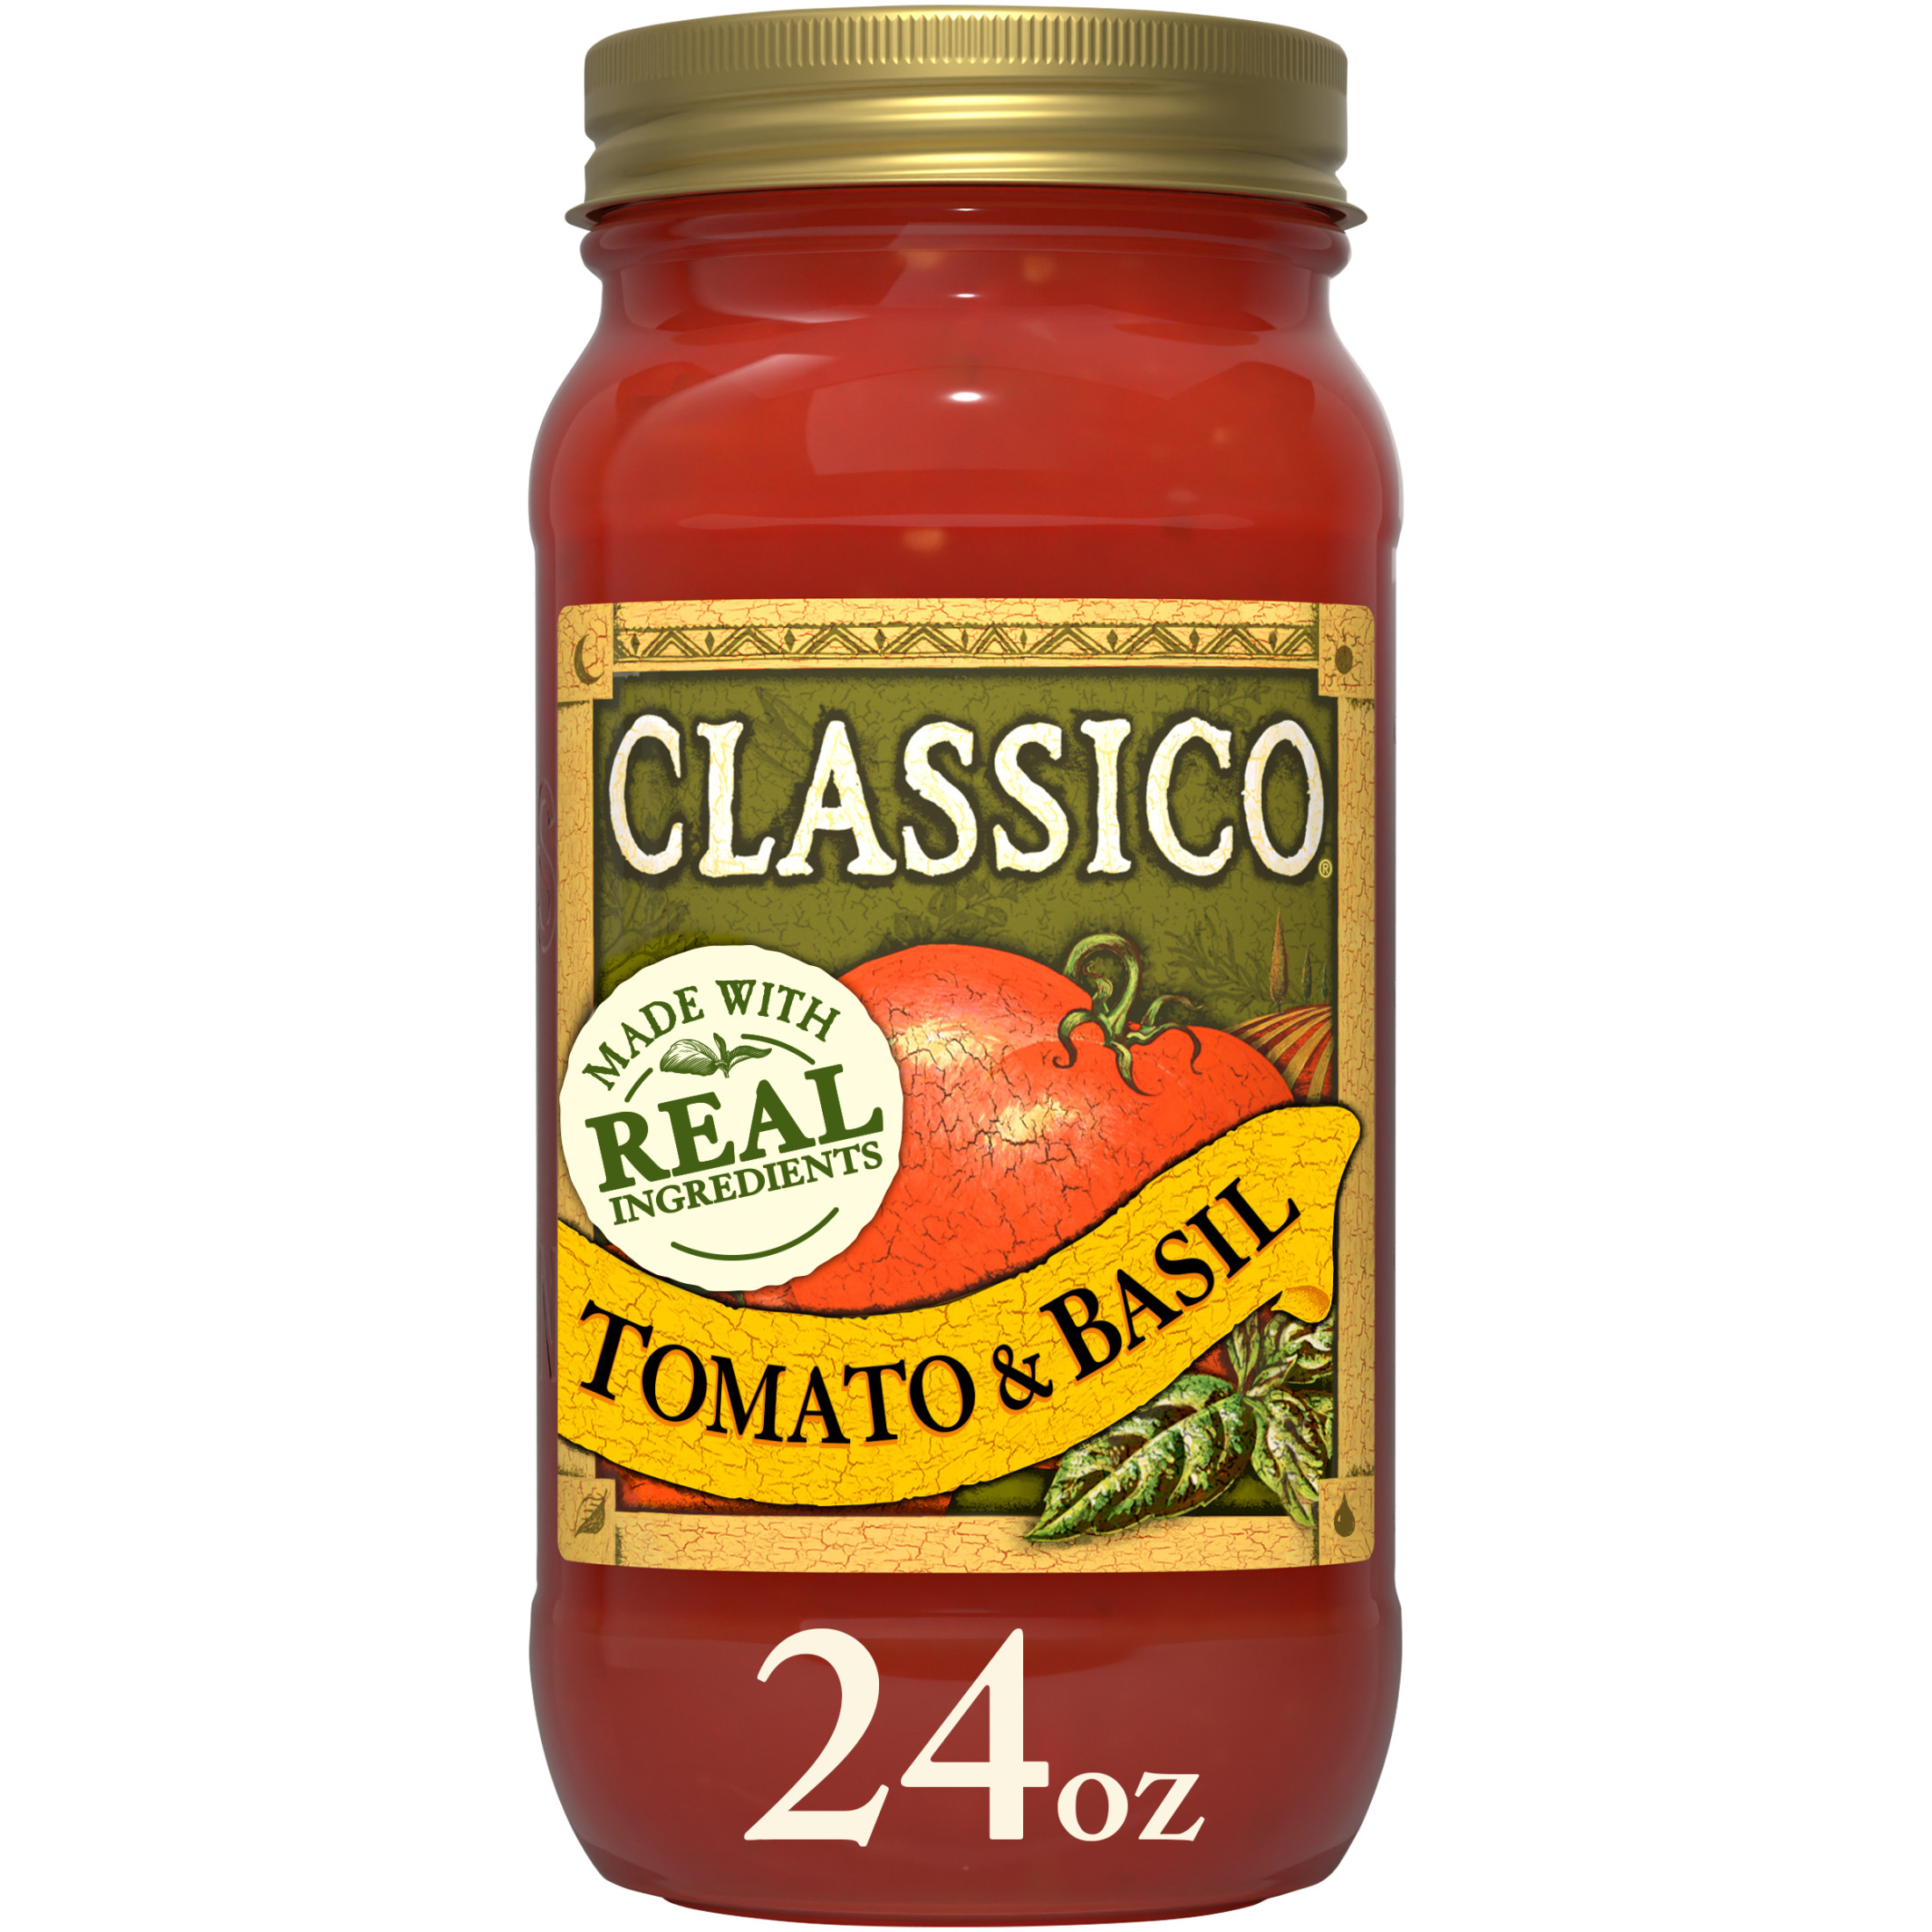 Classico Tomato & Basil Spaghetti Pasta Sauce, 24 oz. Jar - image 1 of 16